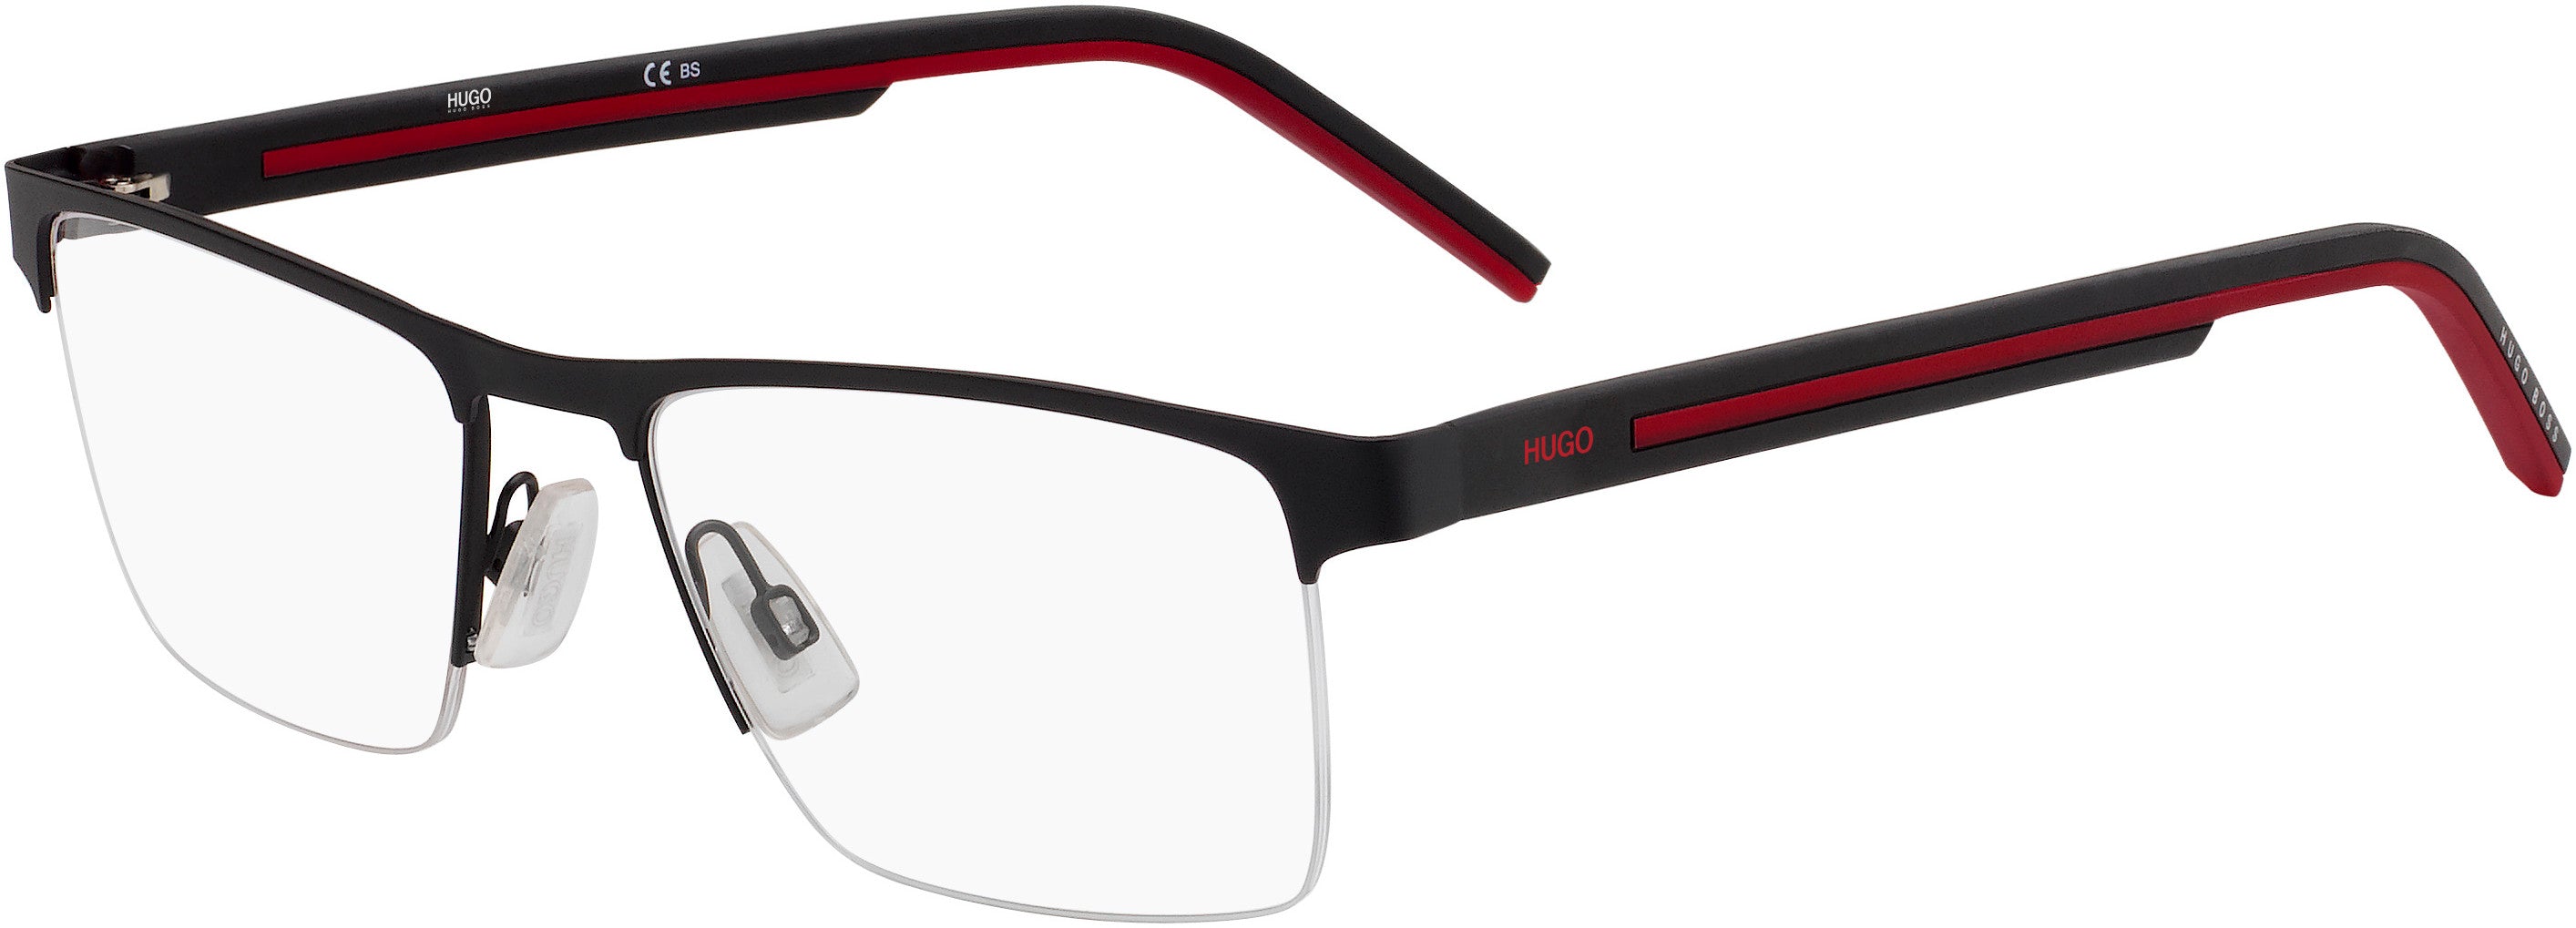 Hugo (hug) Hugo 1066 Rectangular Eyeglasses 0BLX-0BLX  Bkrt Crystal Red (00 Demo Lens)